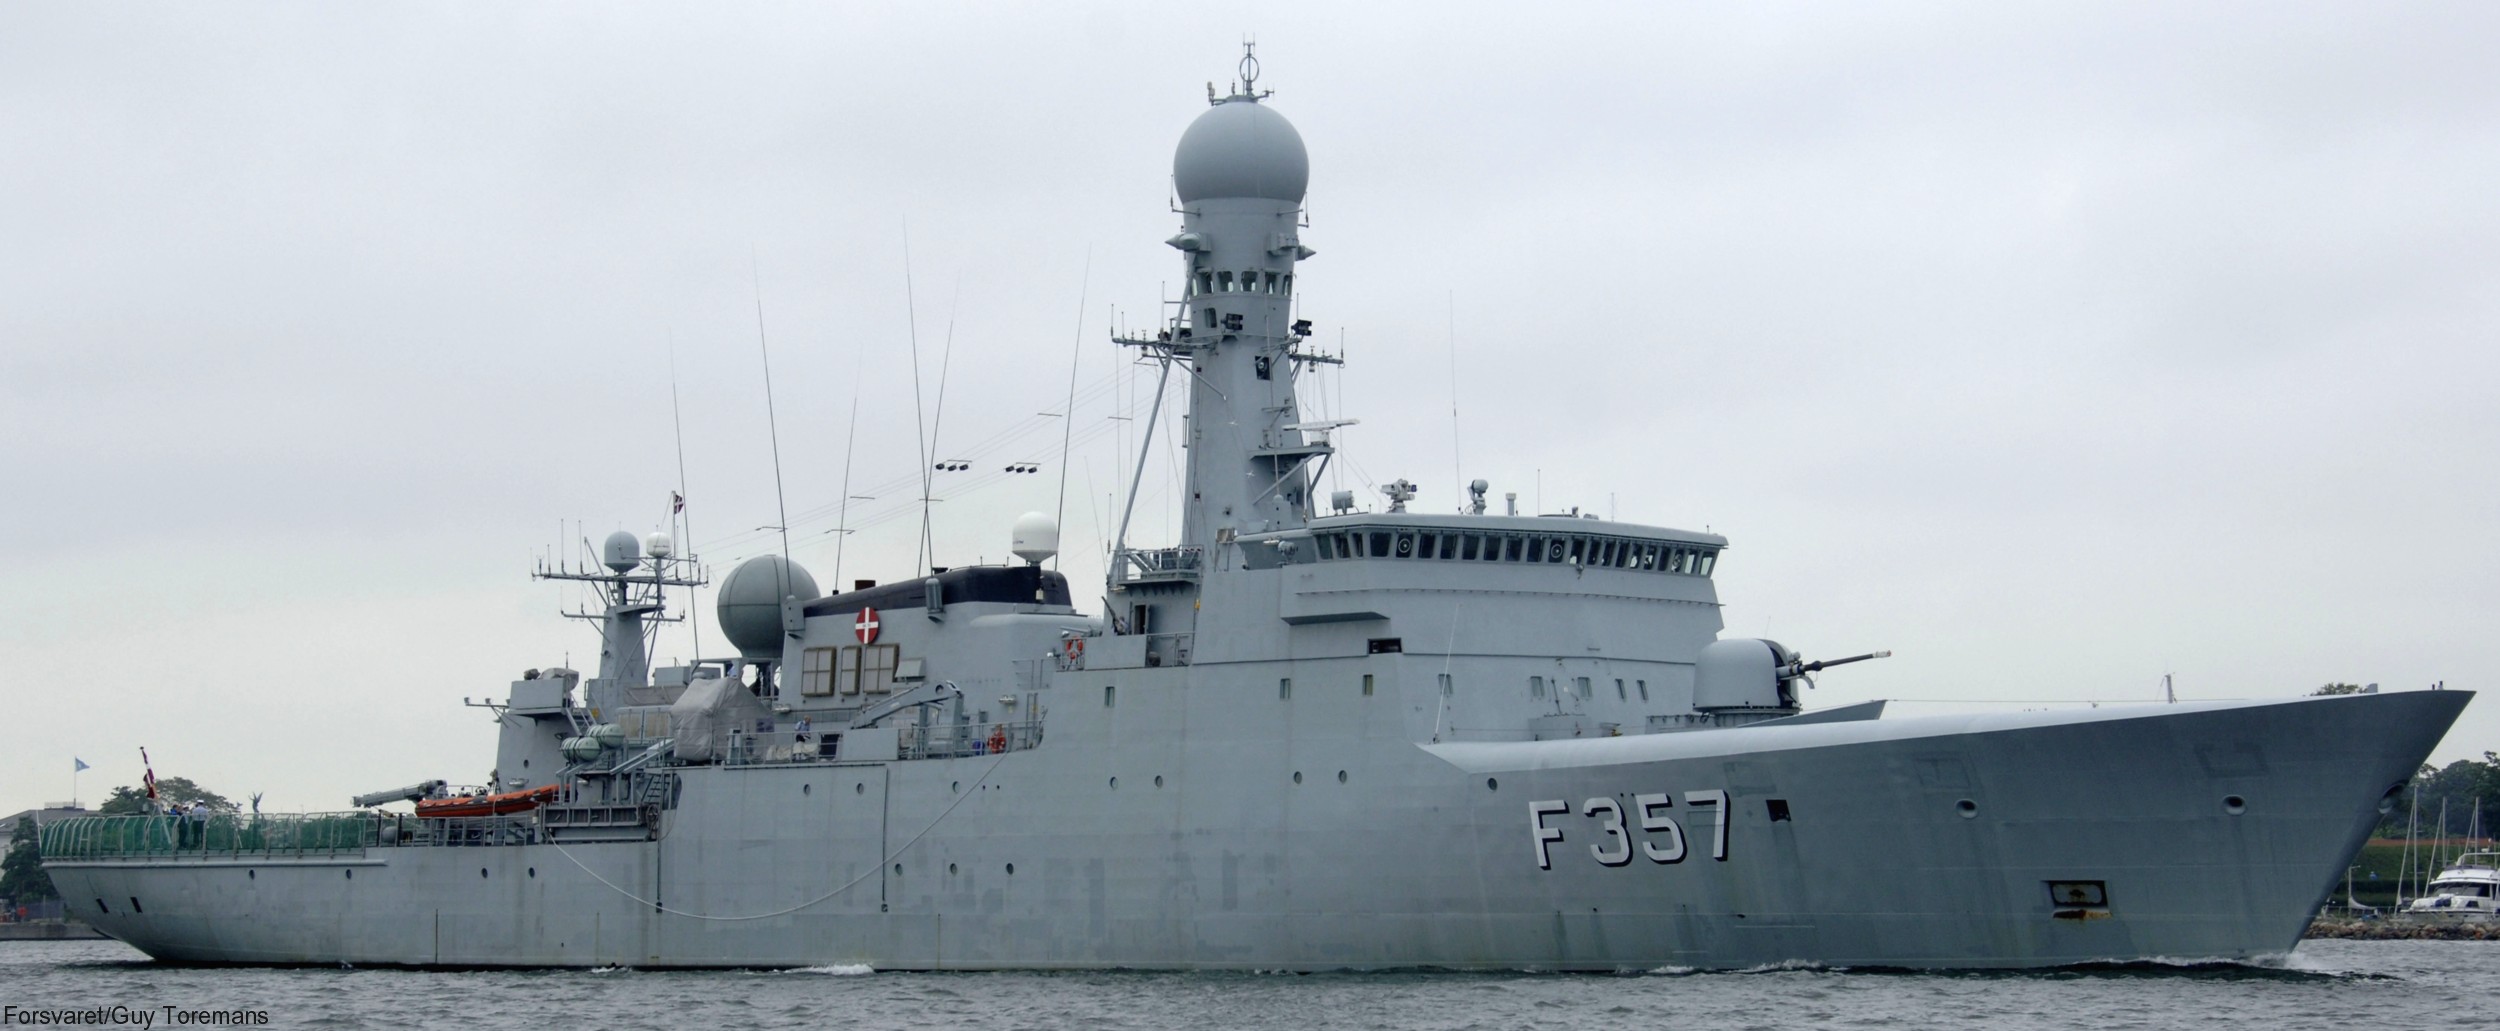 f-357 hdms thetis ocean patrol frigate royal danish navy kongelige danske marine inspektionsskibet 27